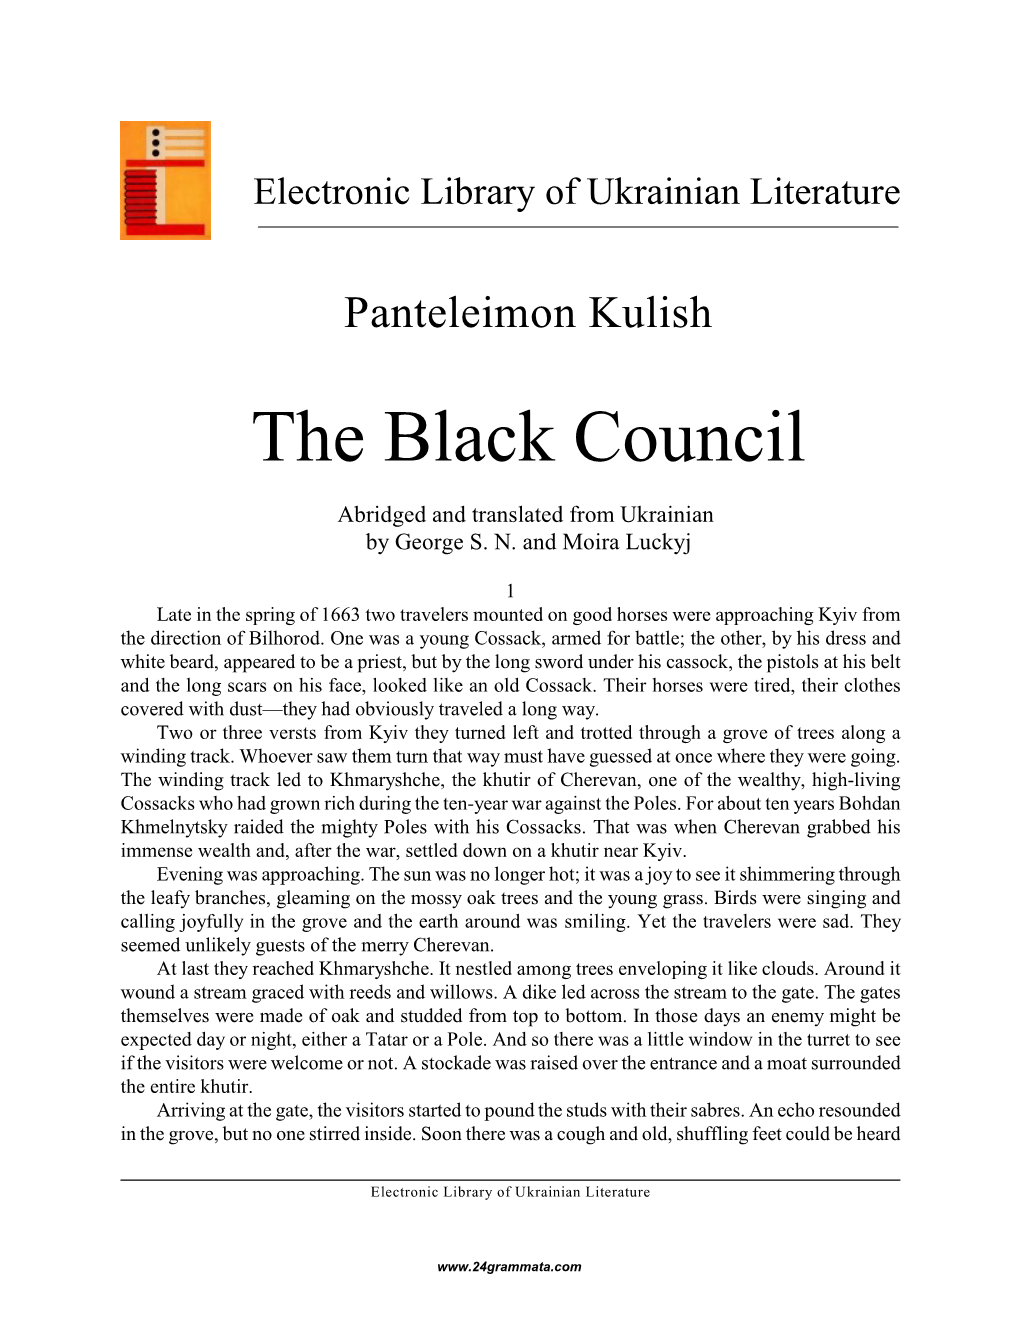 The Black Council